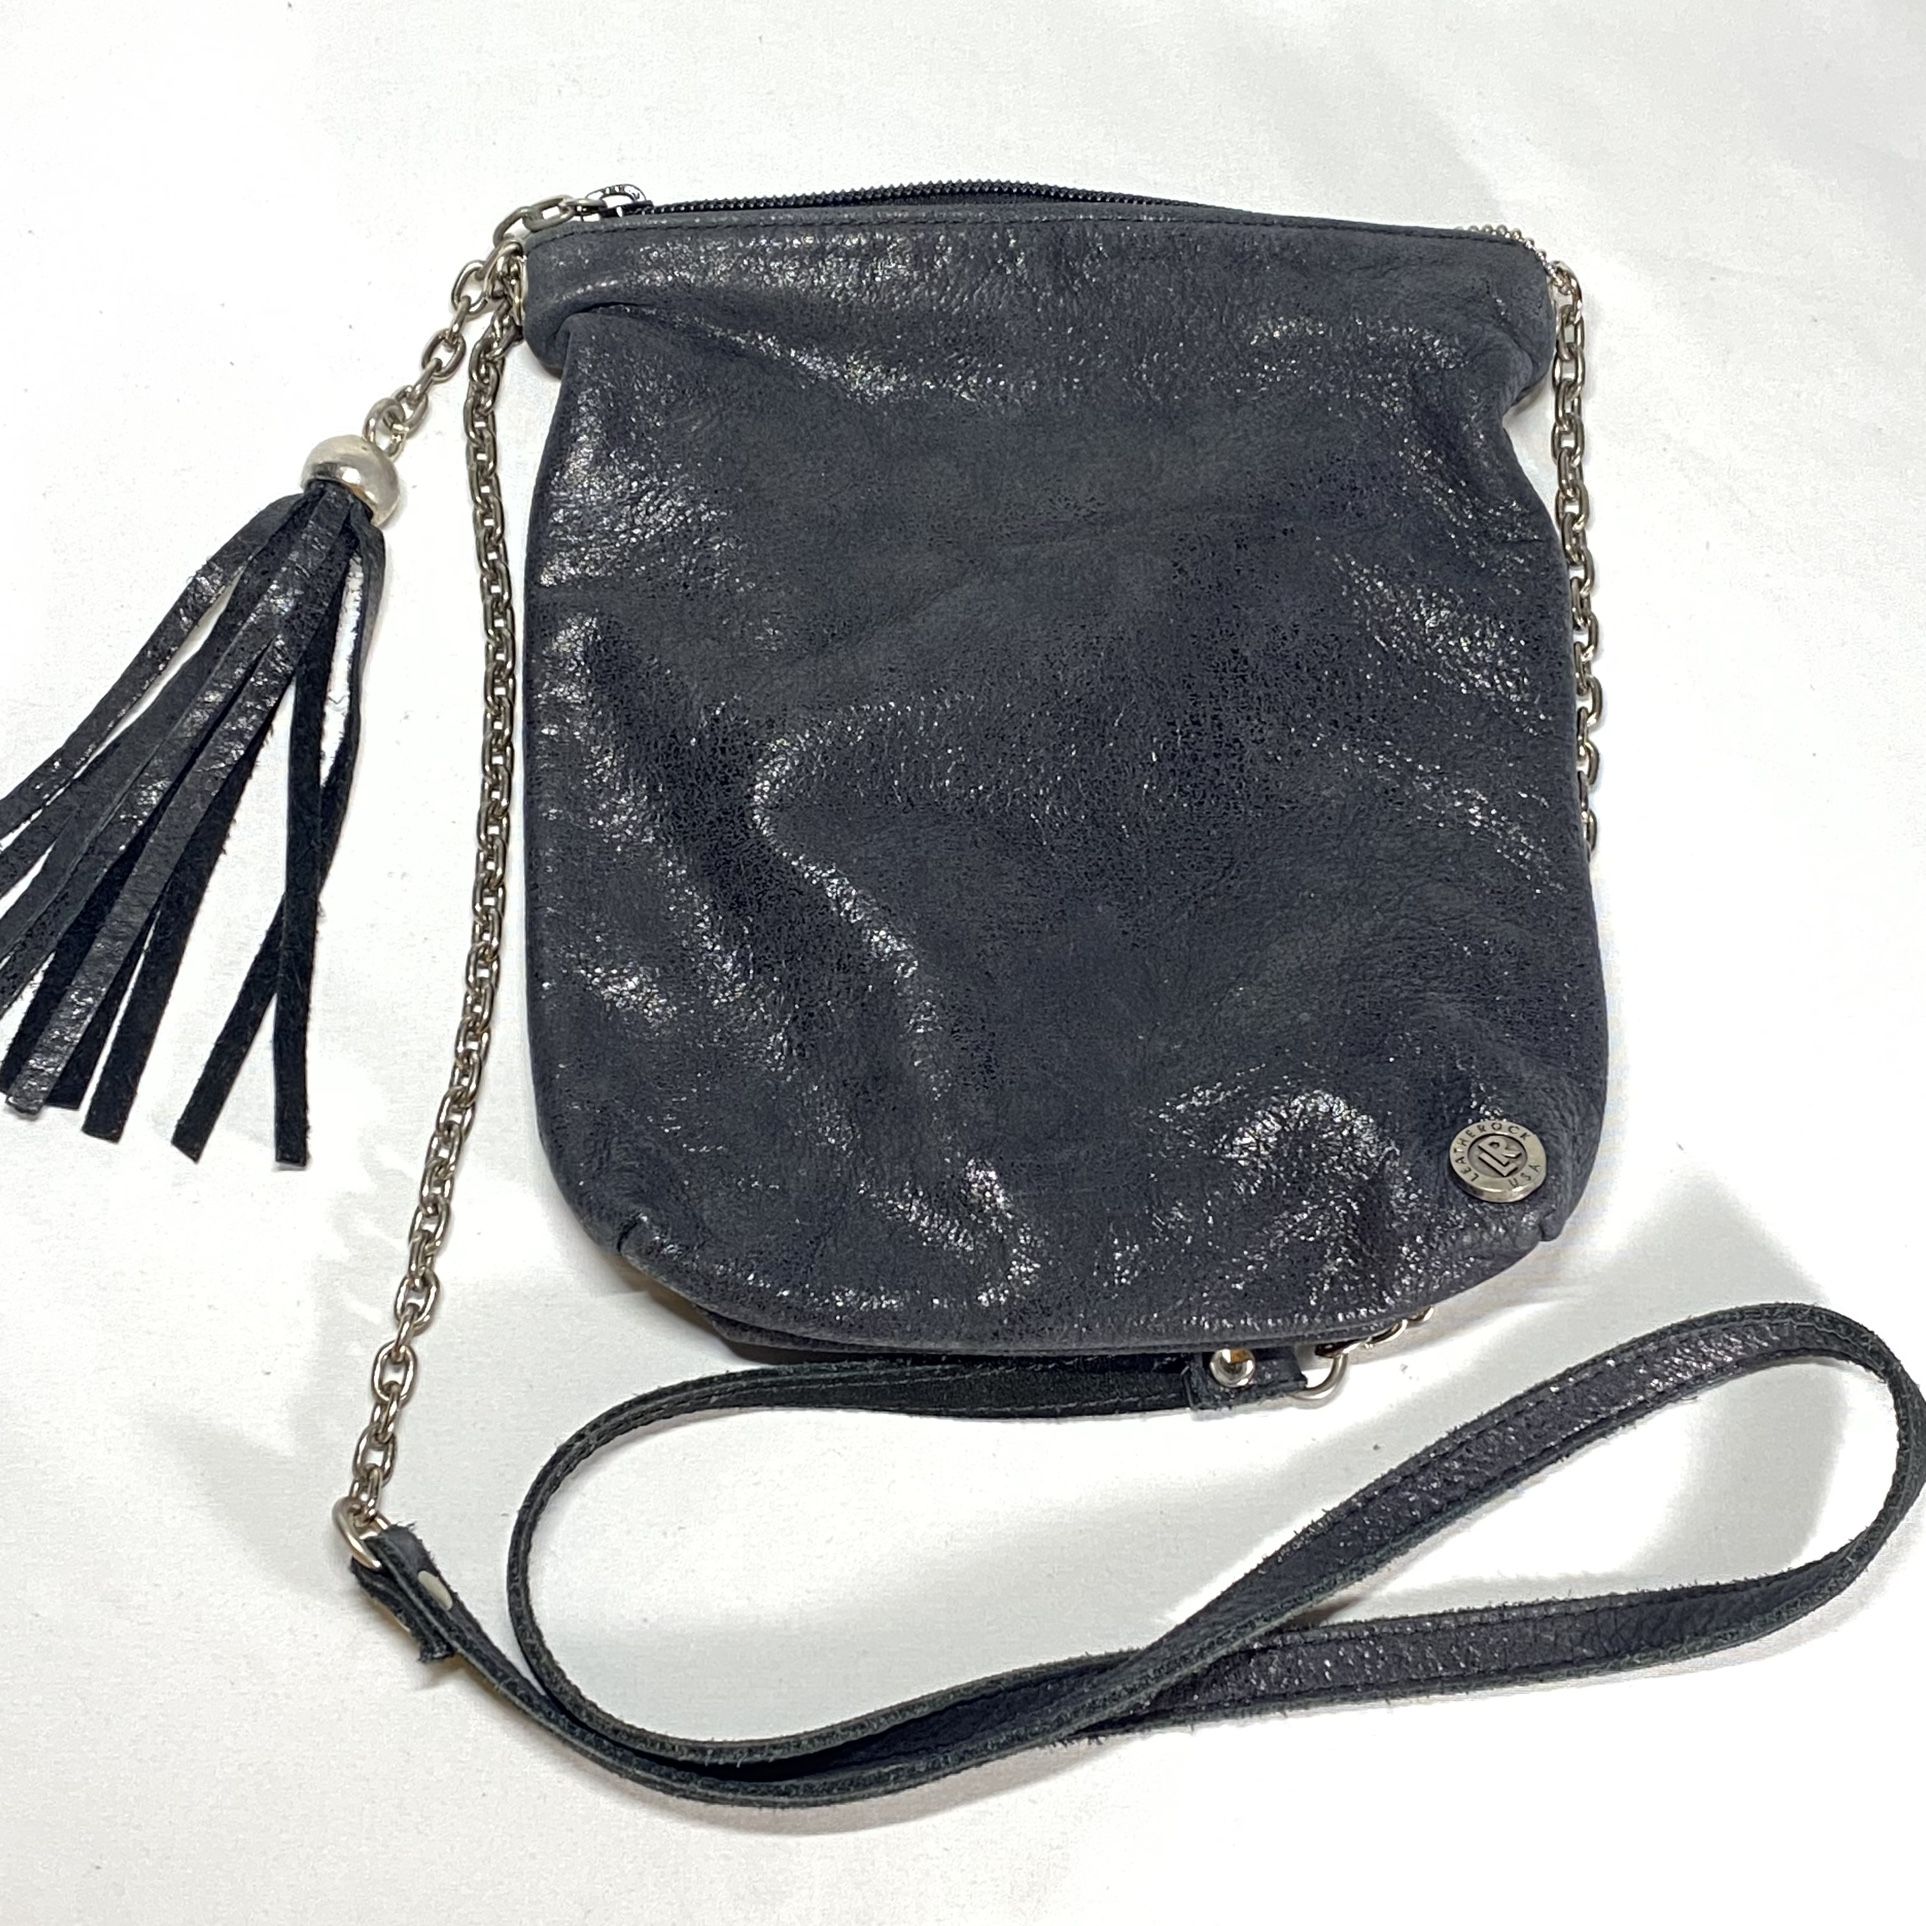 Leatherock Crossbody Bag Black Suede Western BOHO Fringe Leather MADE IN USA